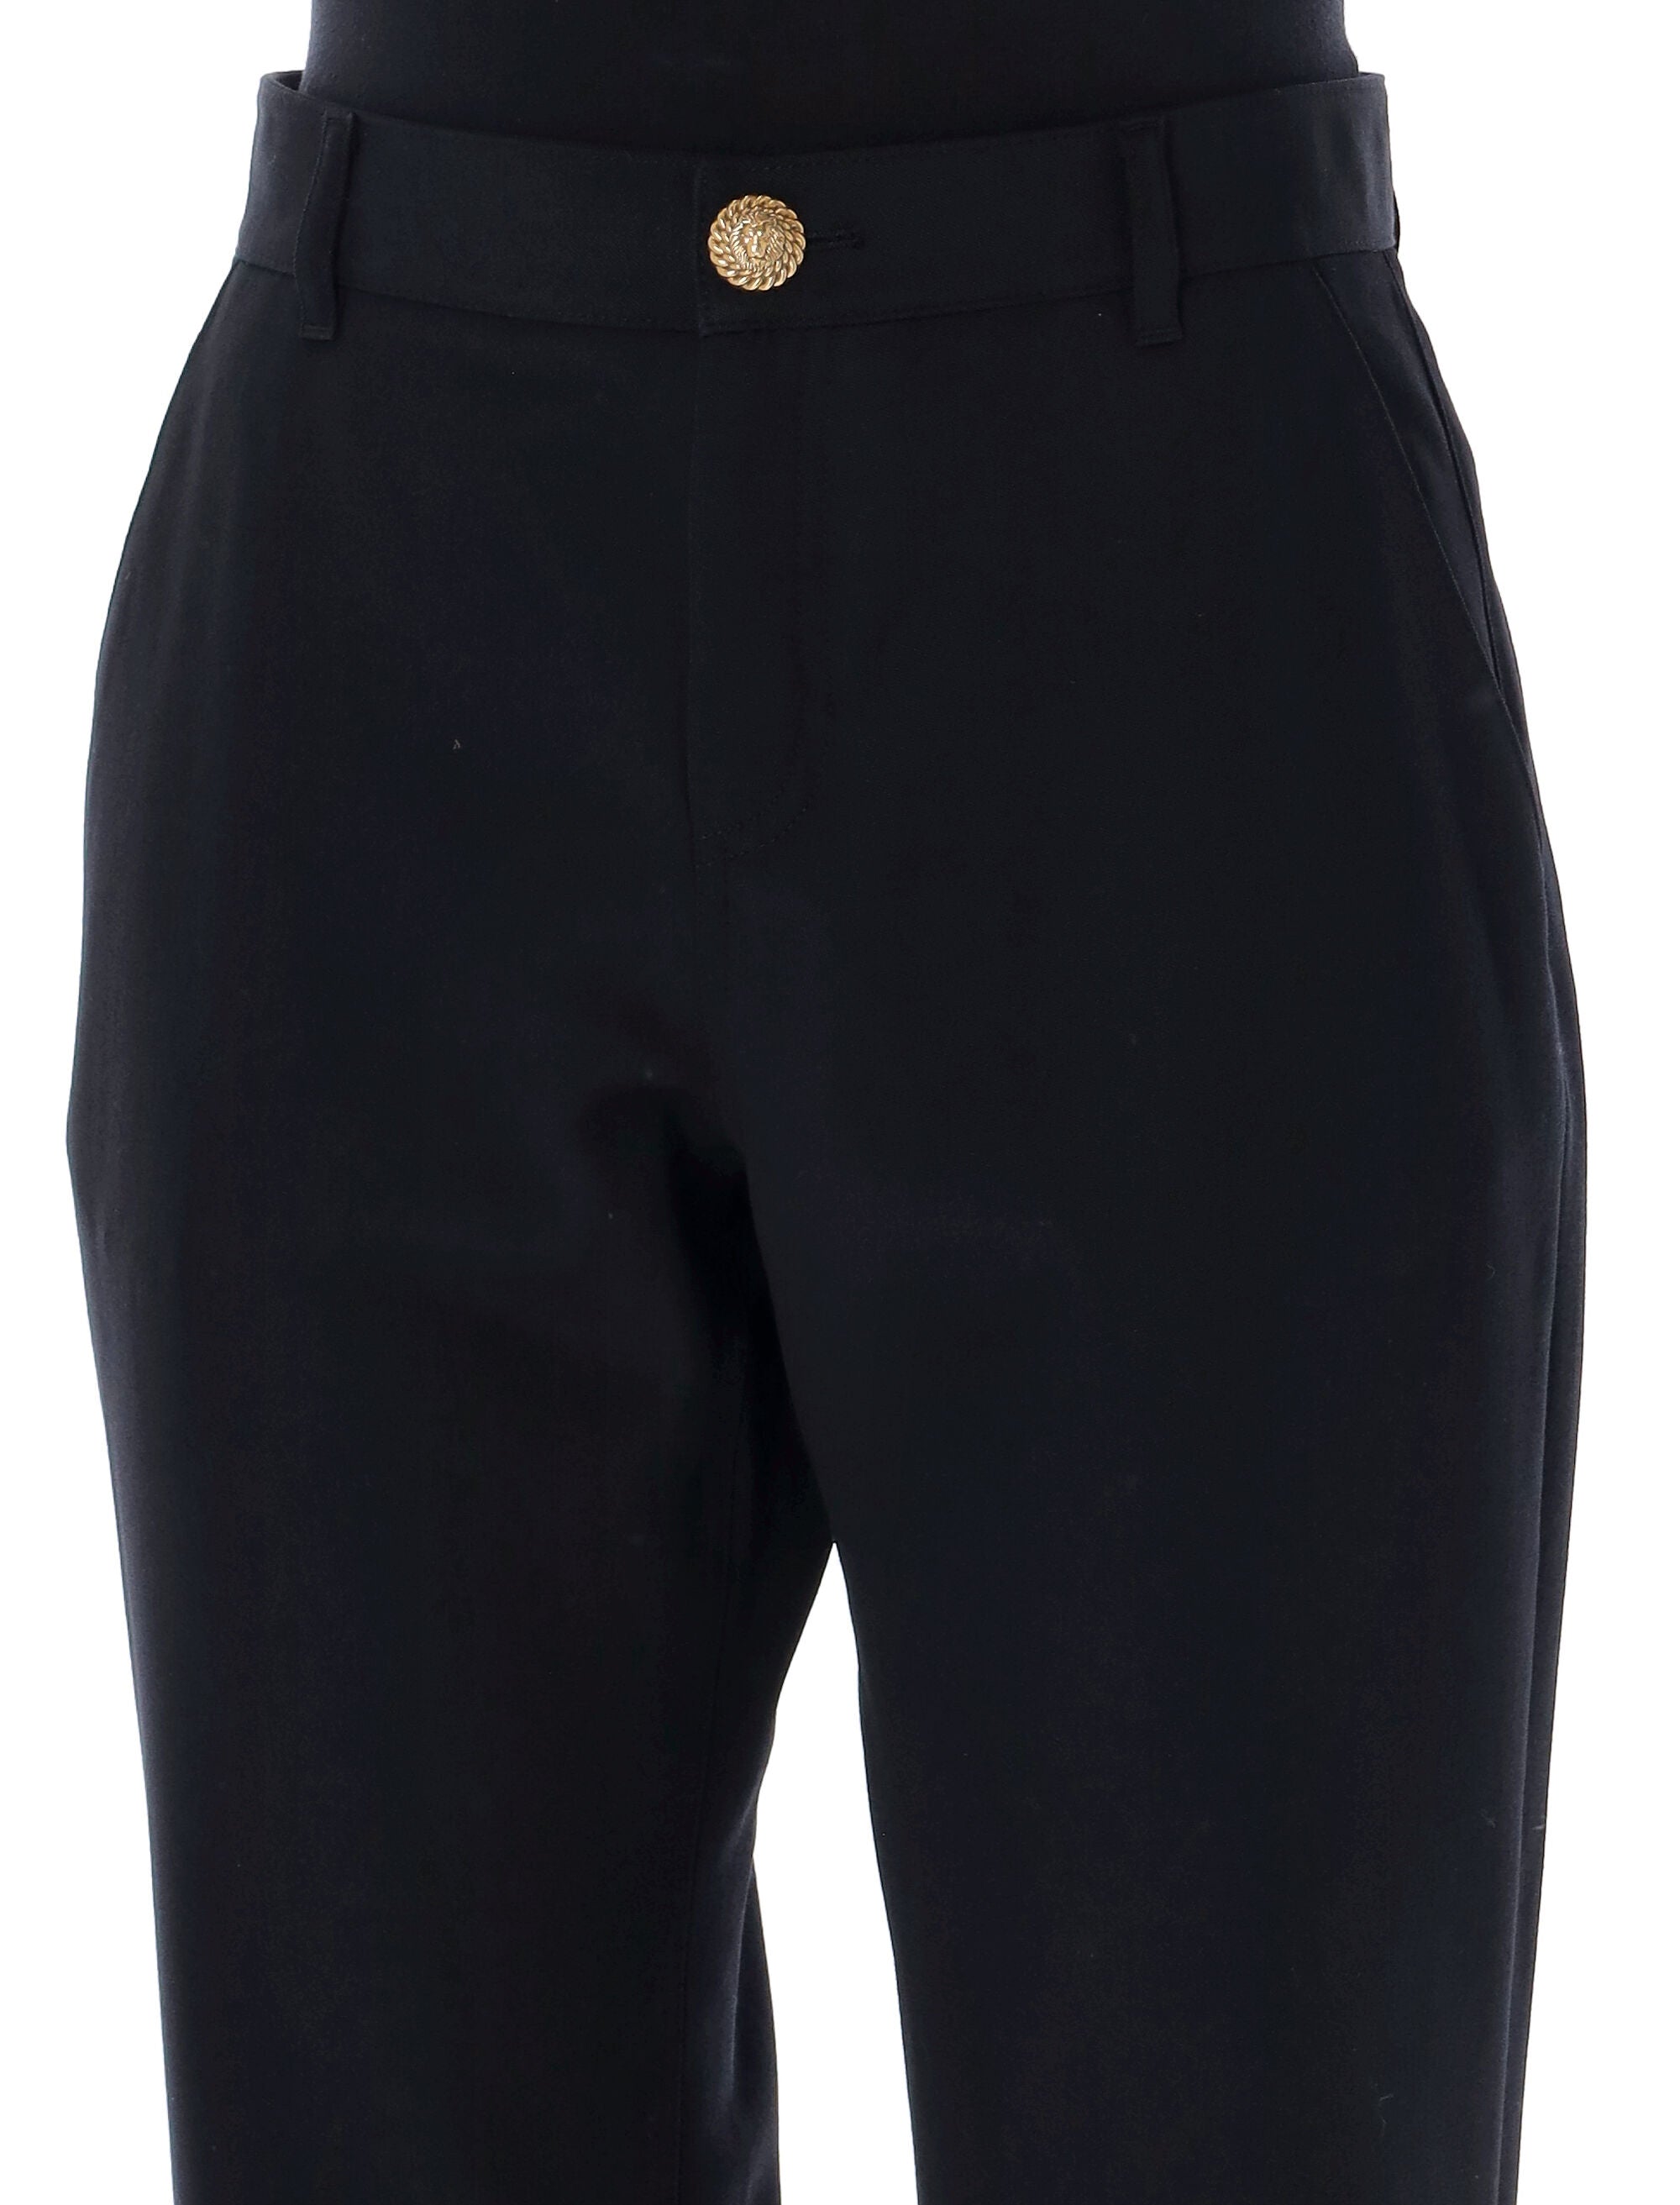 Shop Balmain Luxurious Black Bootcut Pants For The Modern Woman